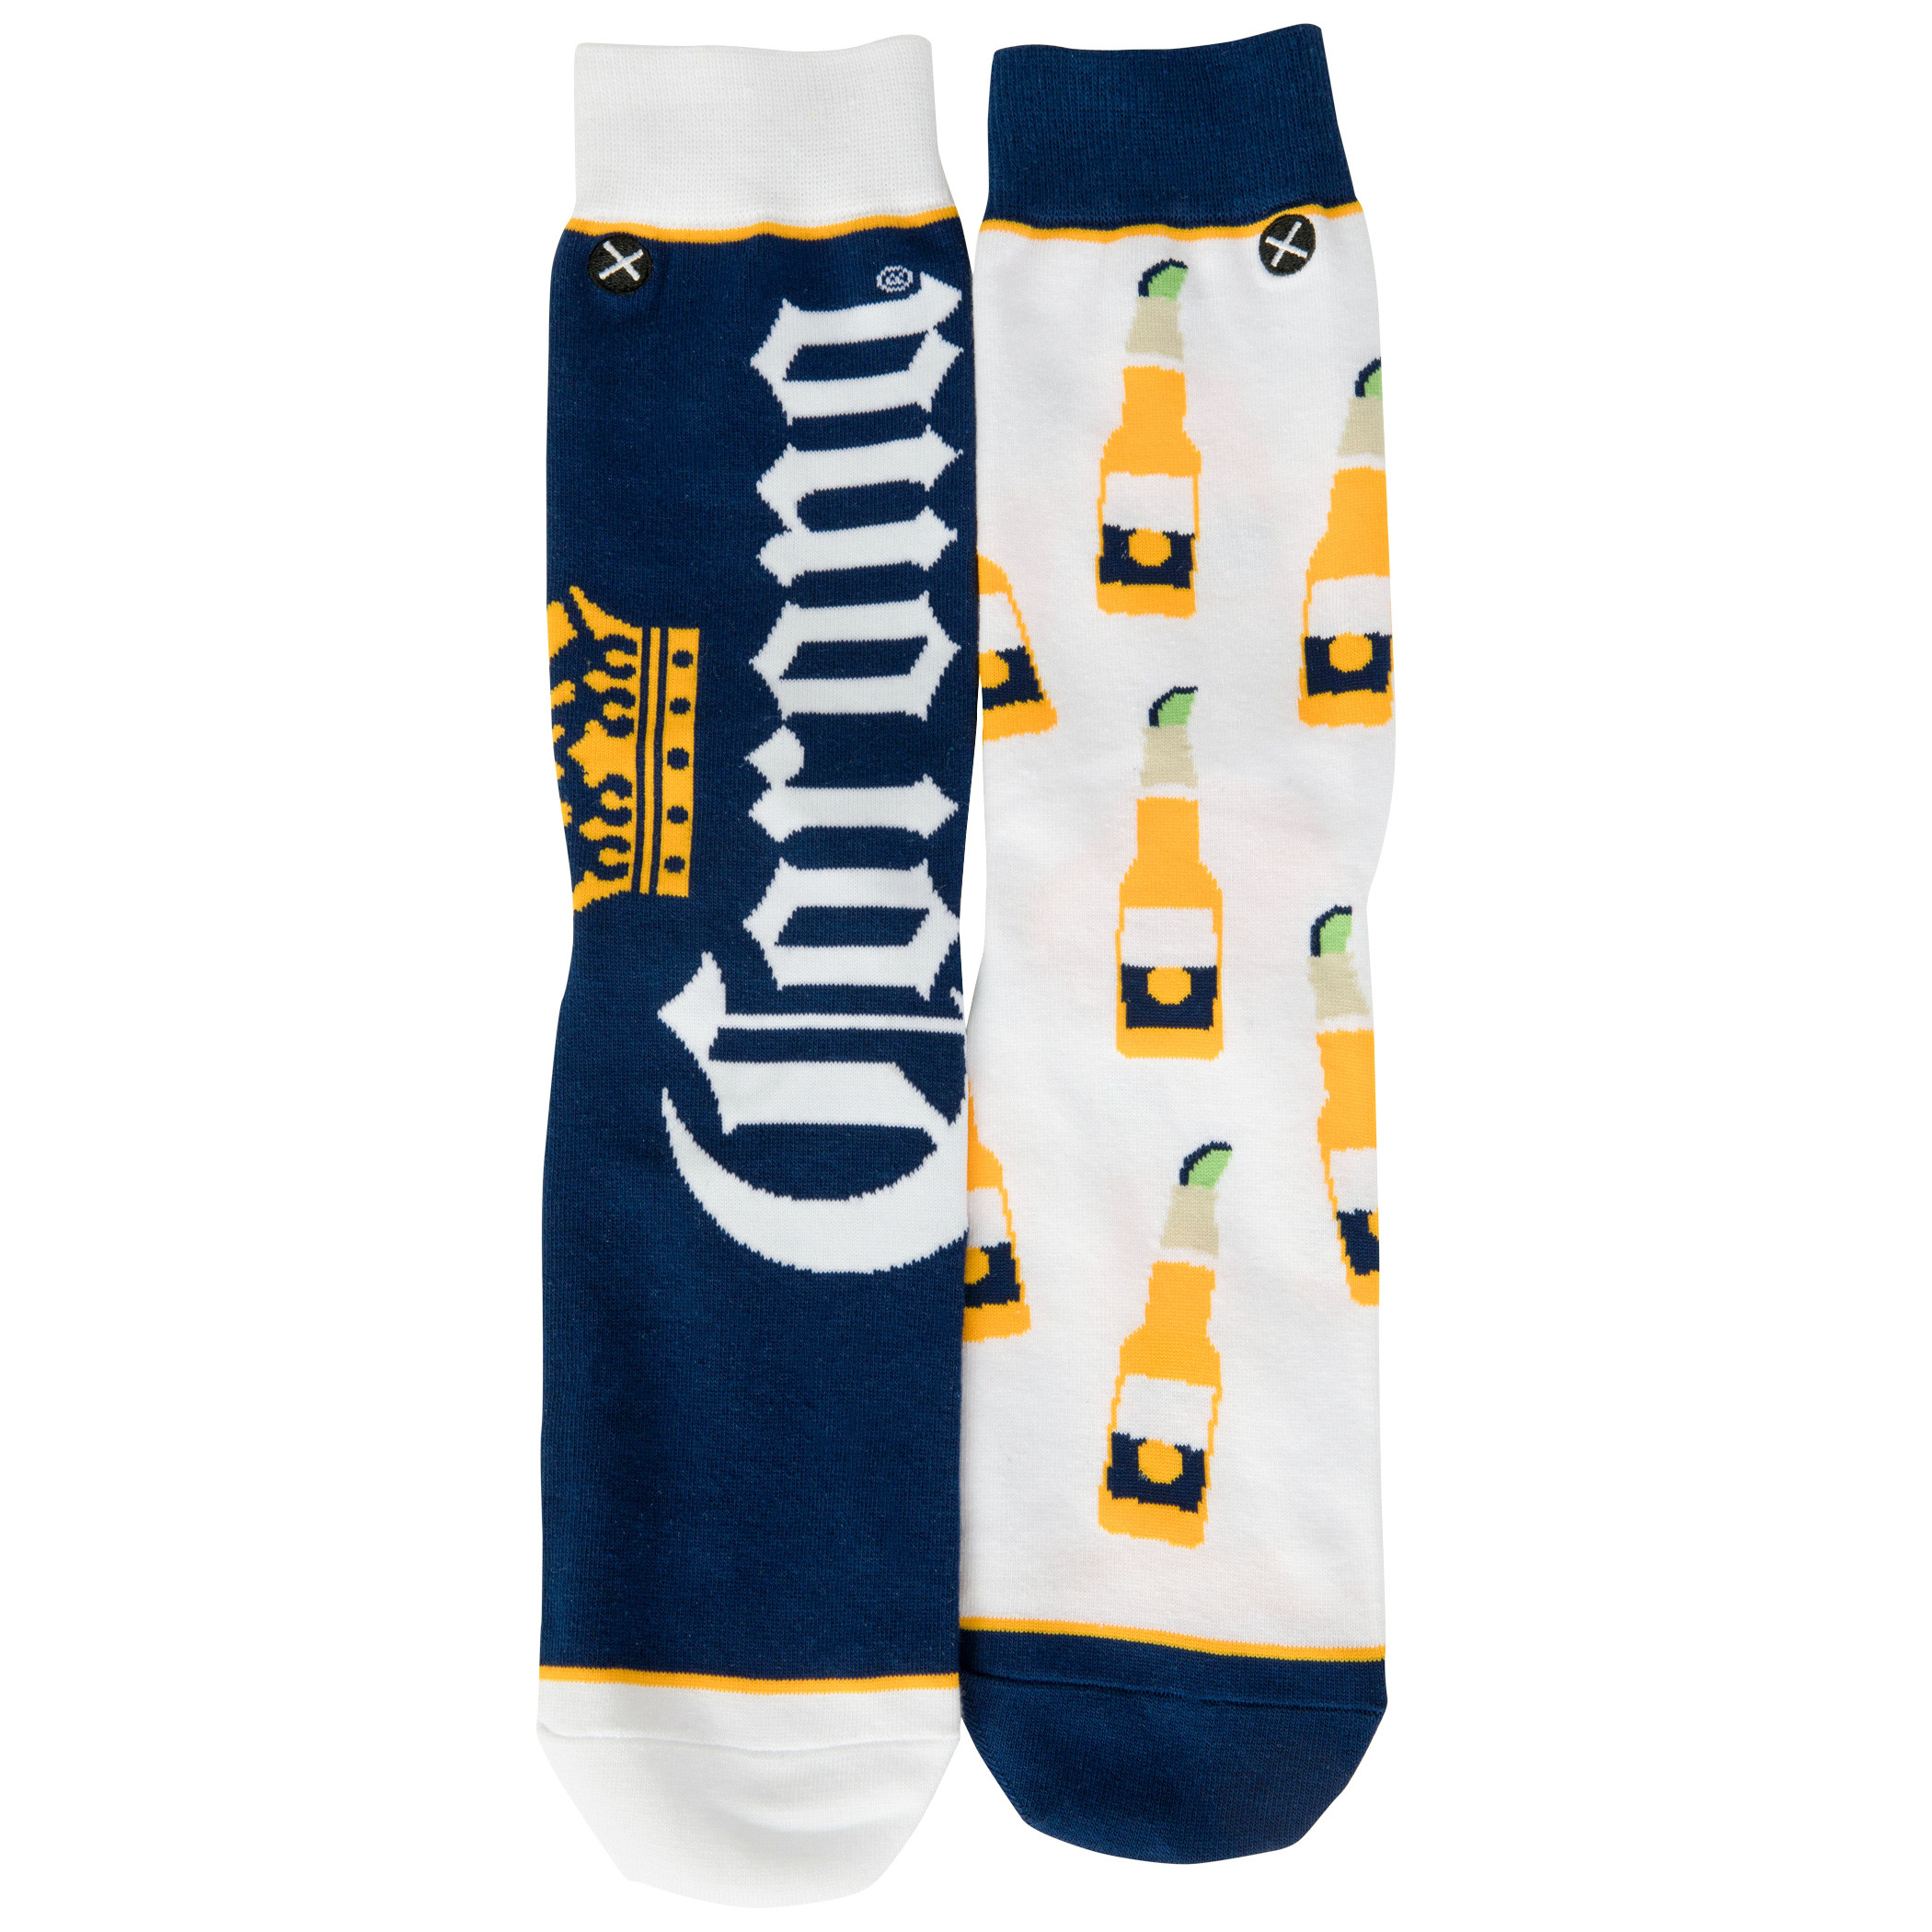 Corona Extra Logo and Bottles Split Crew Socks